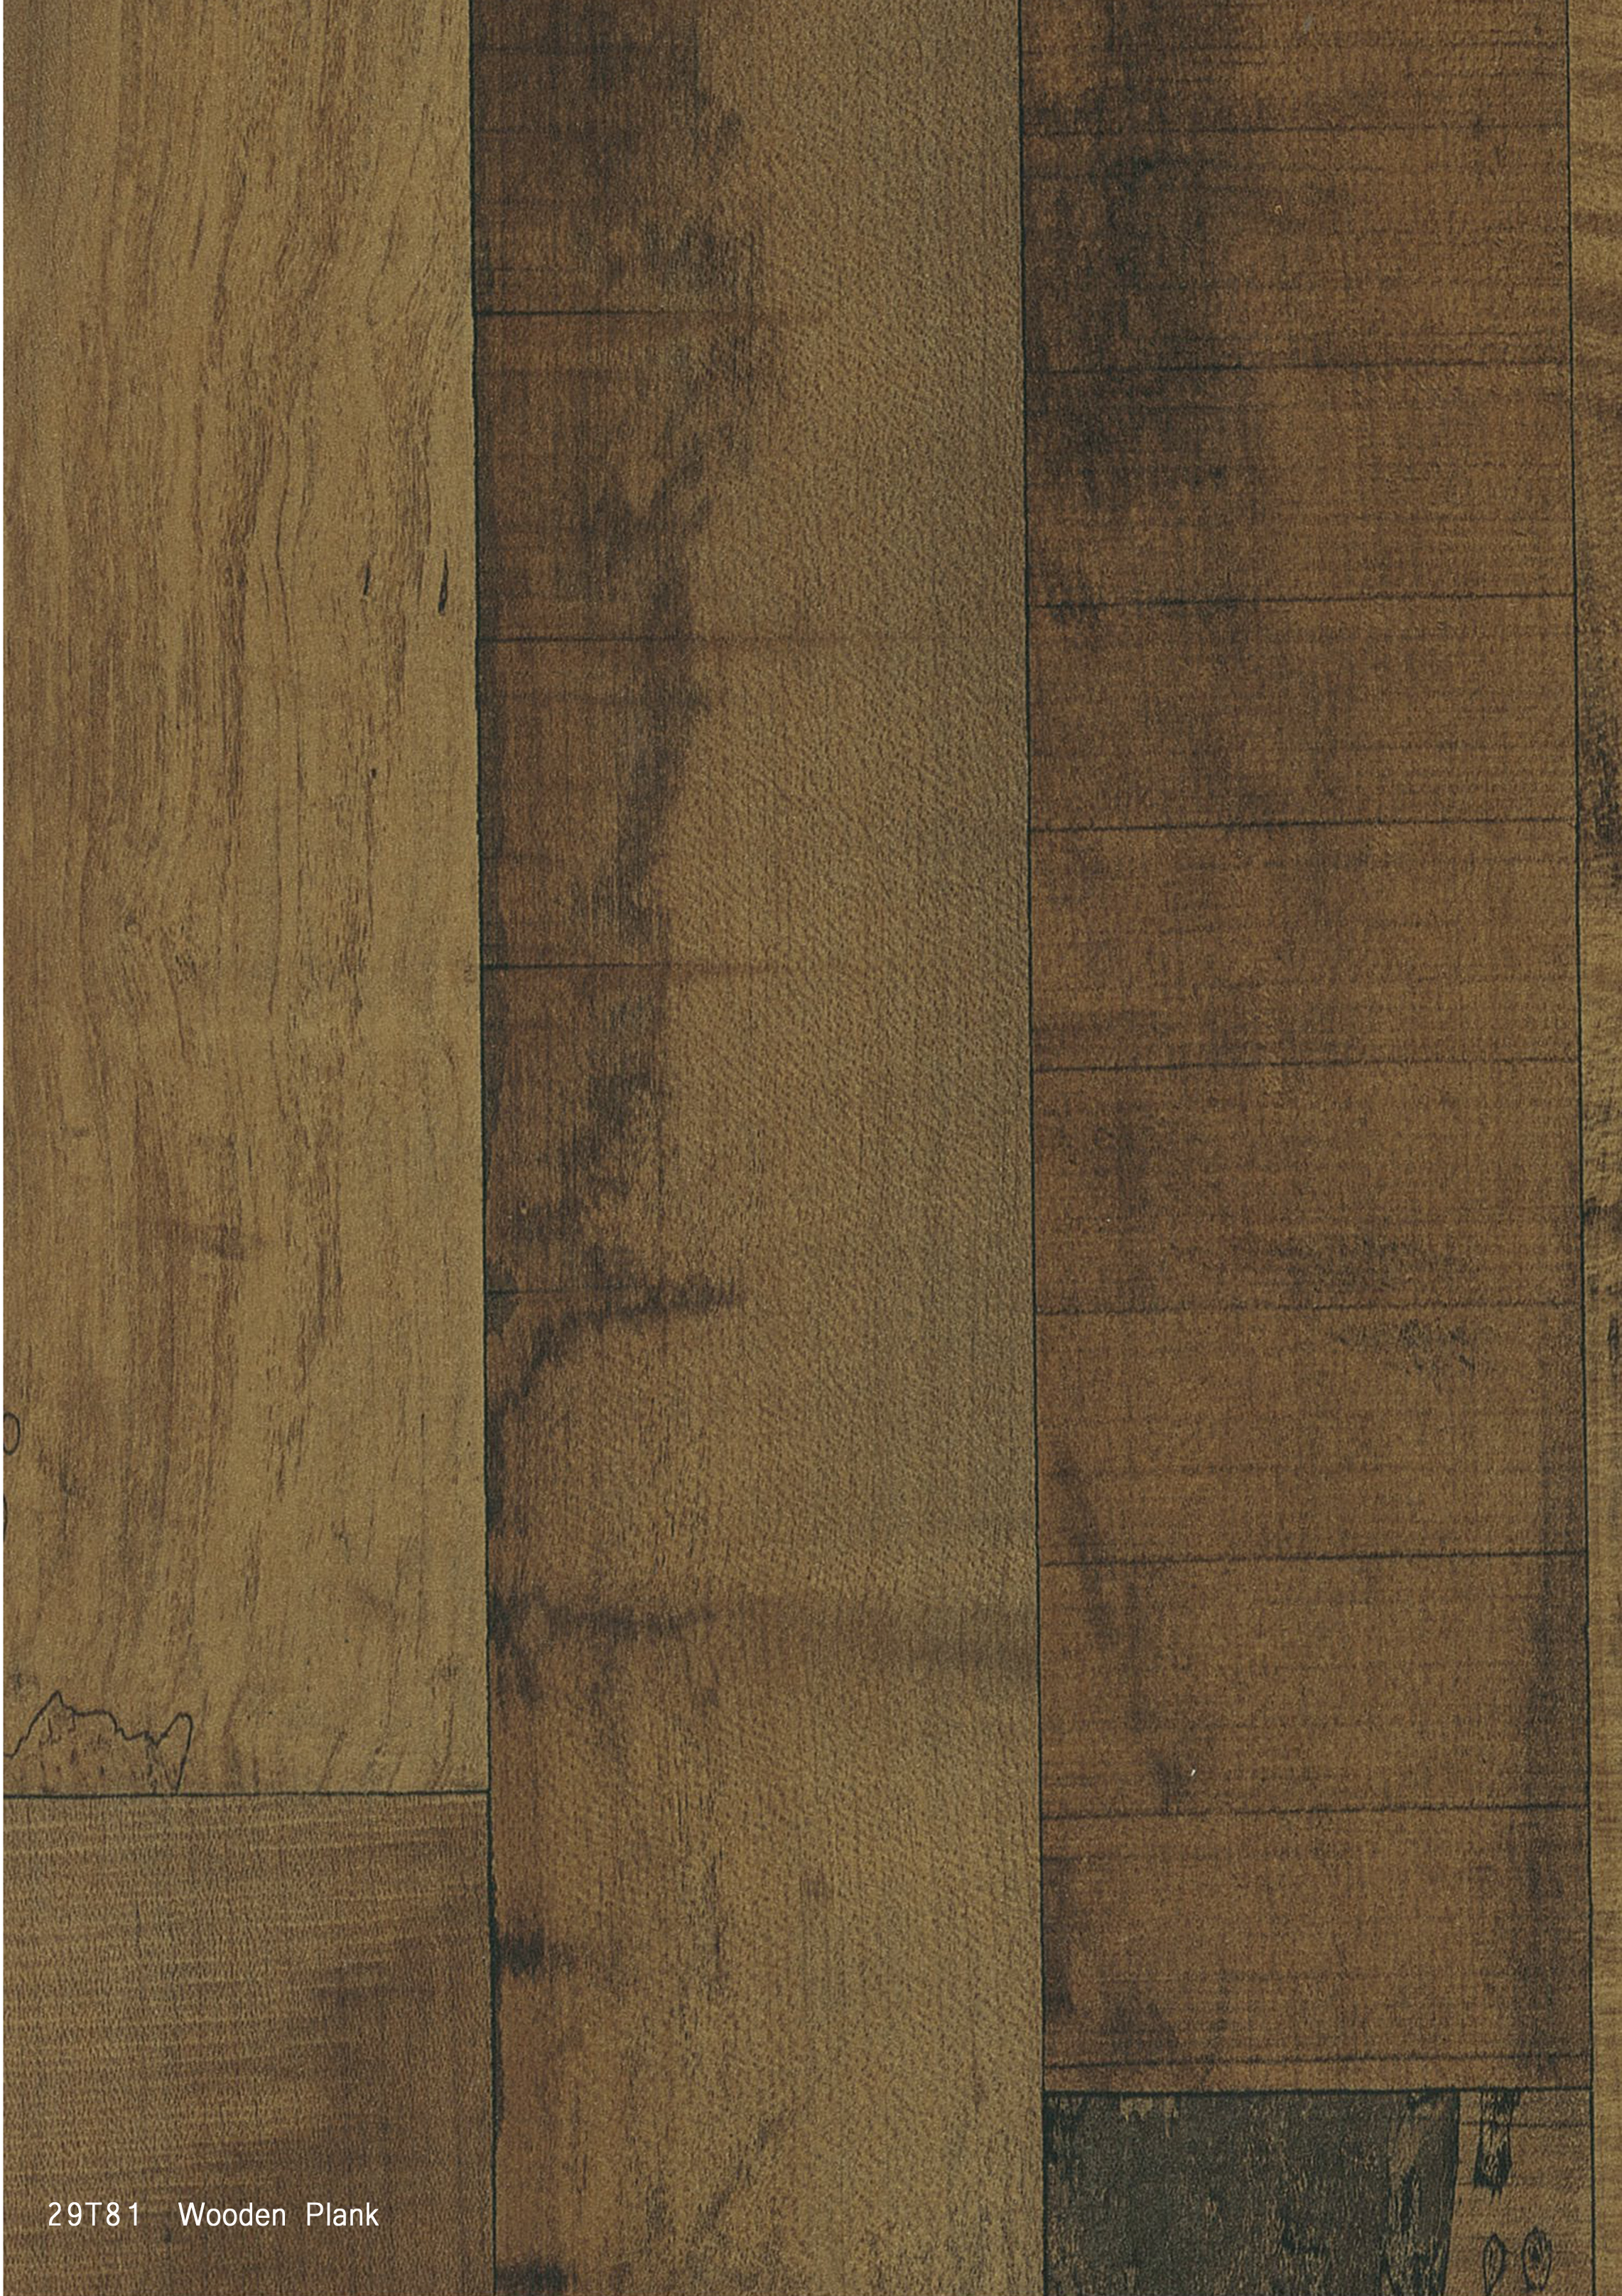 Wooden Plank - Evershine